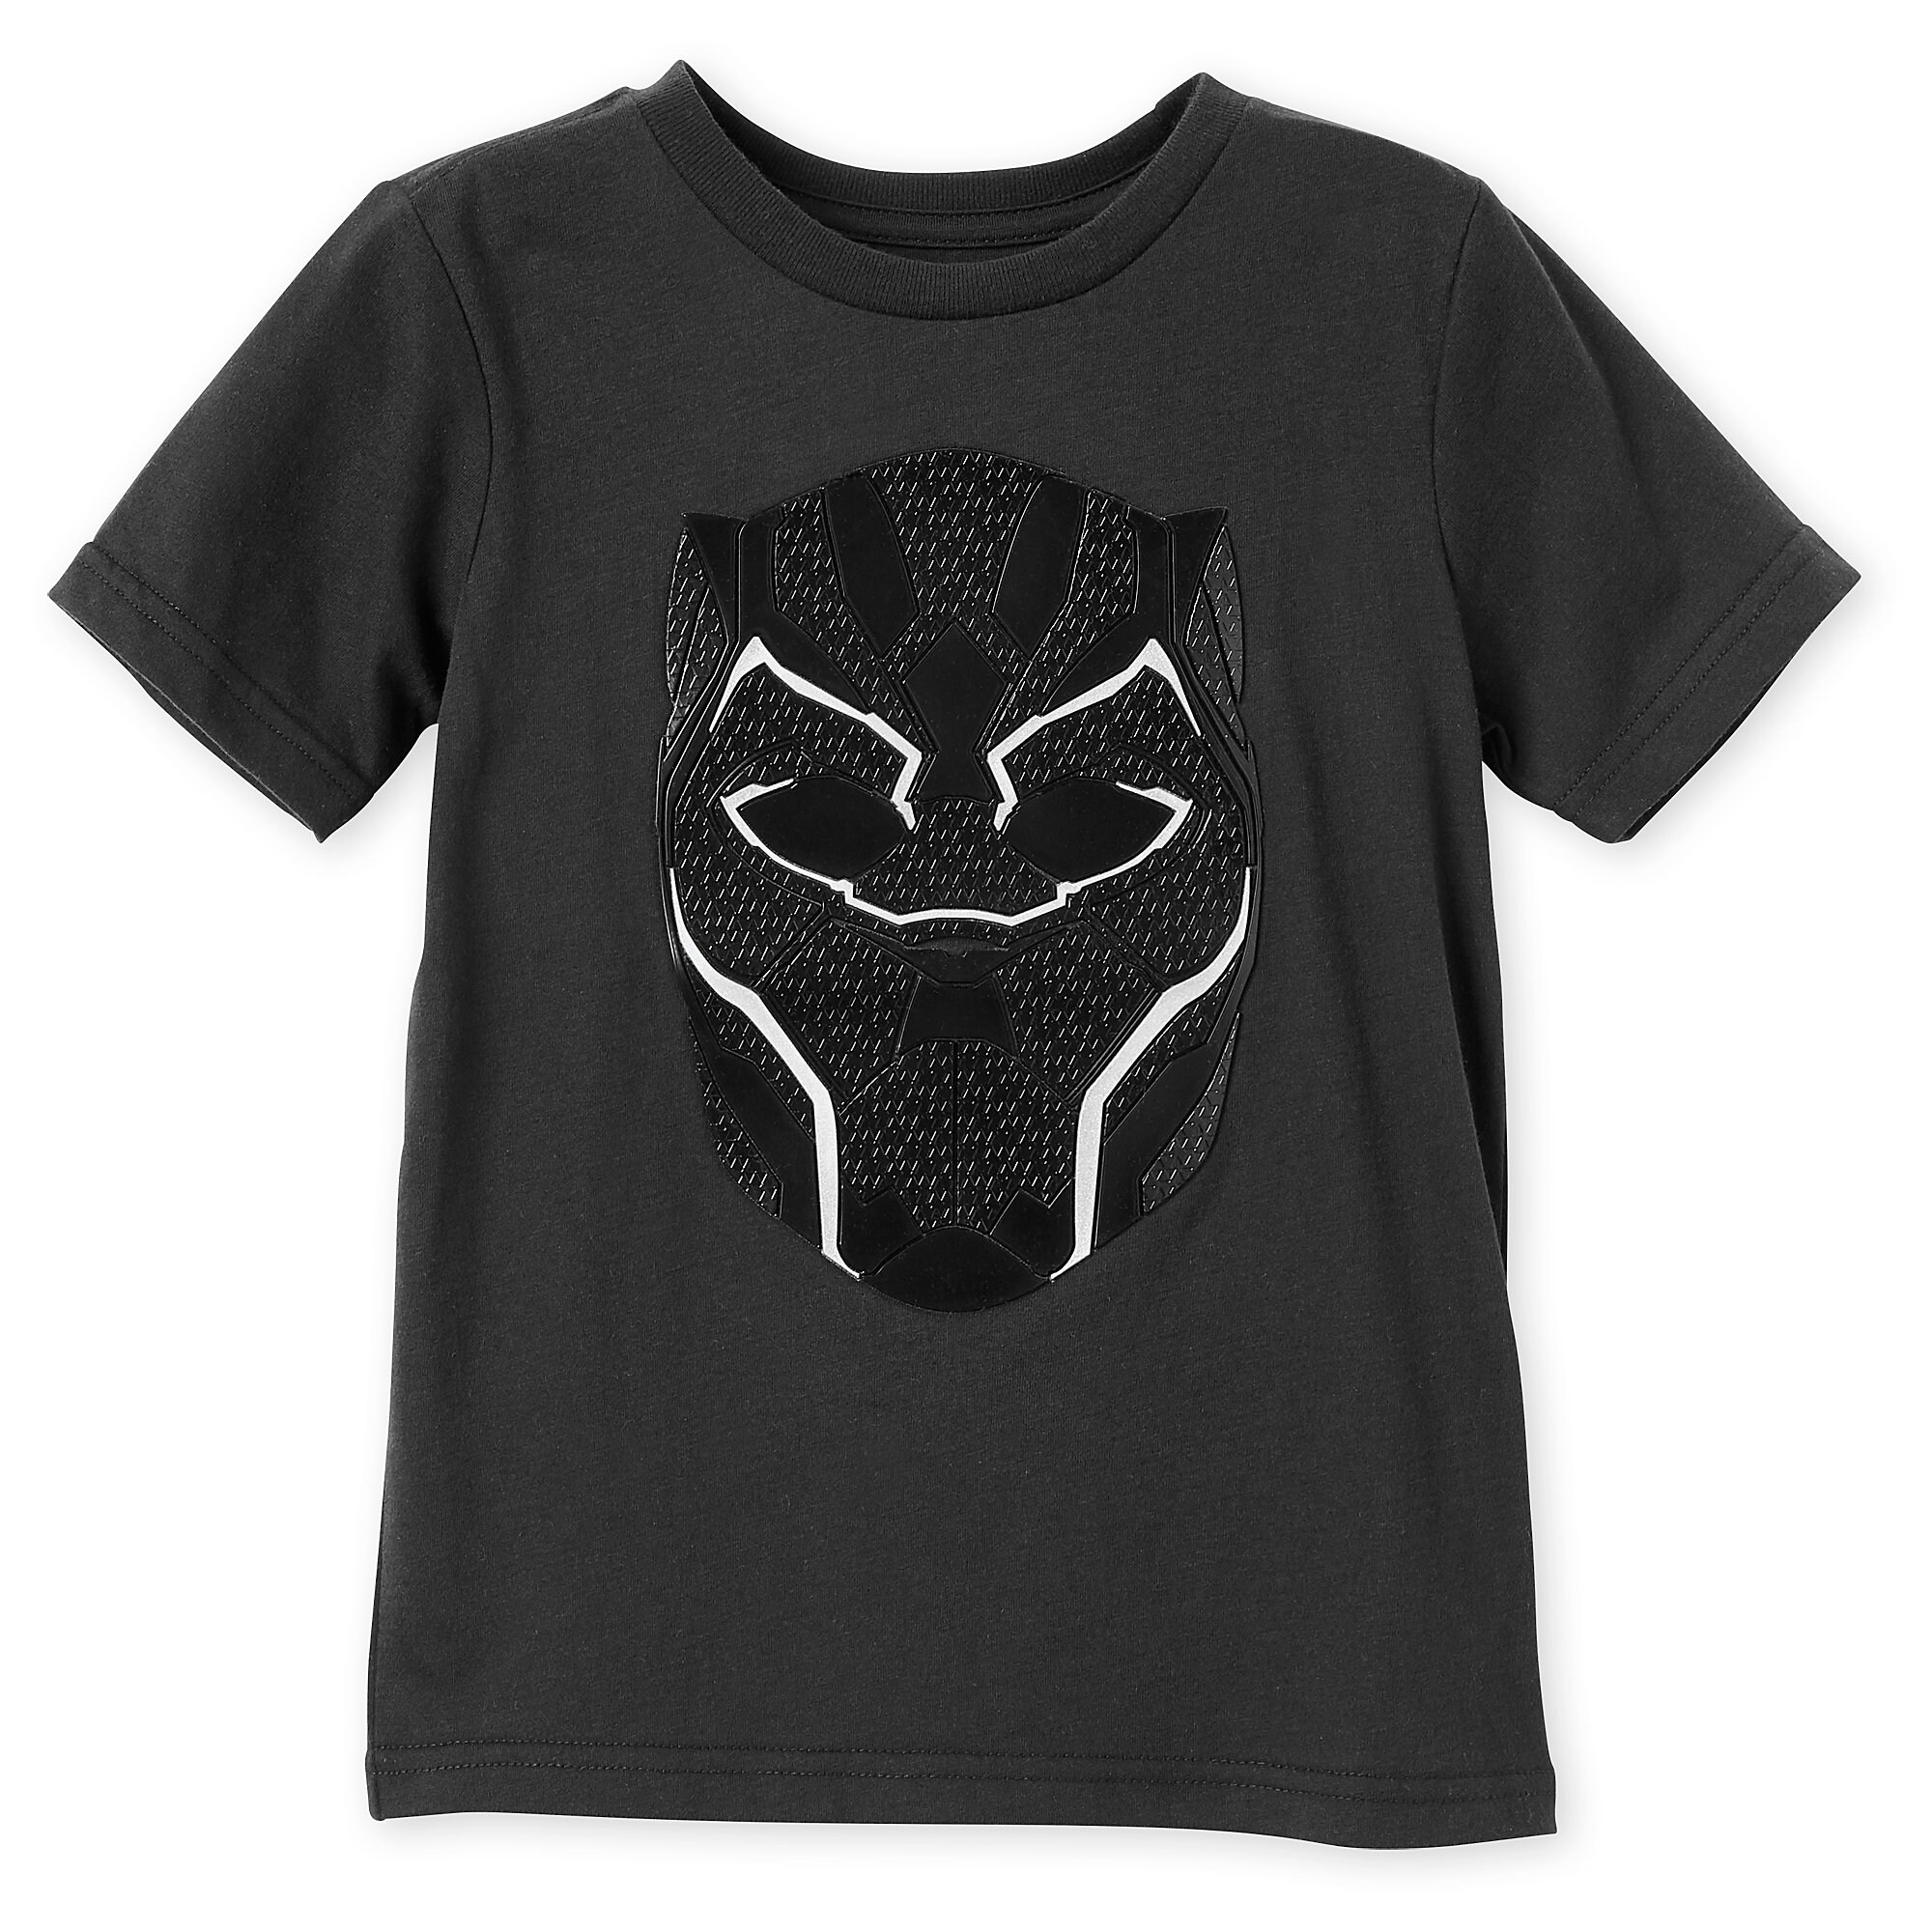 Black Panther Mask T-Shirt for Kids